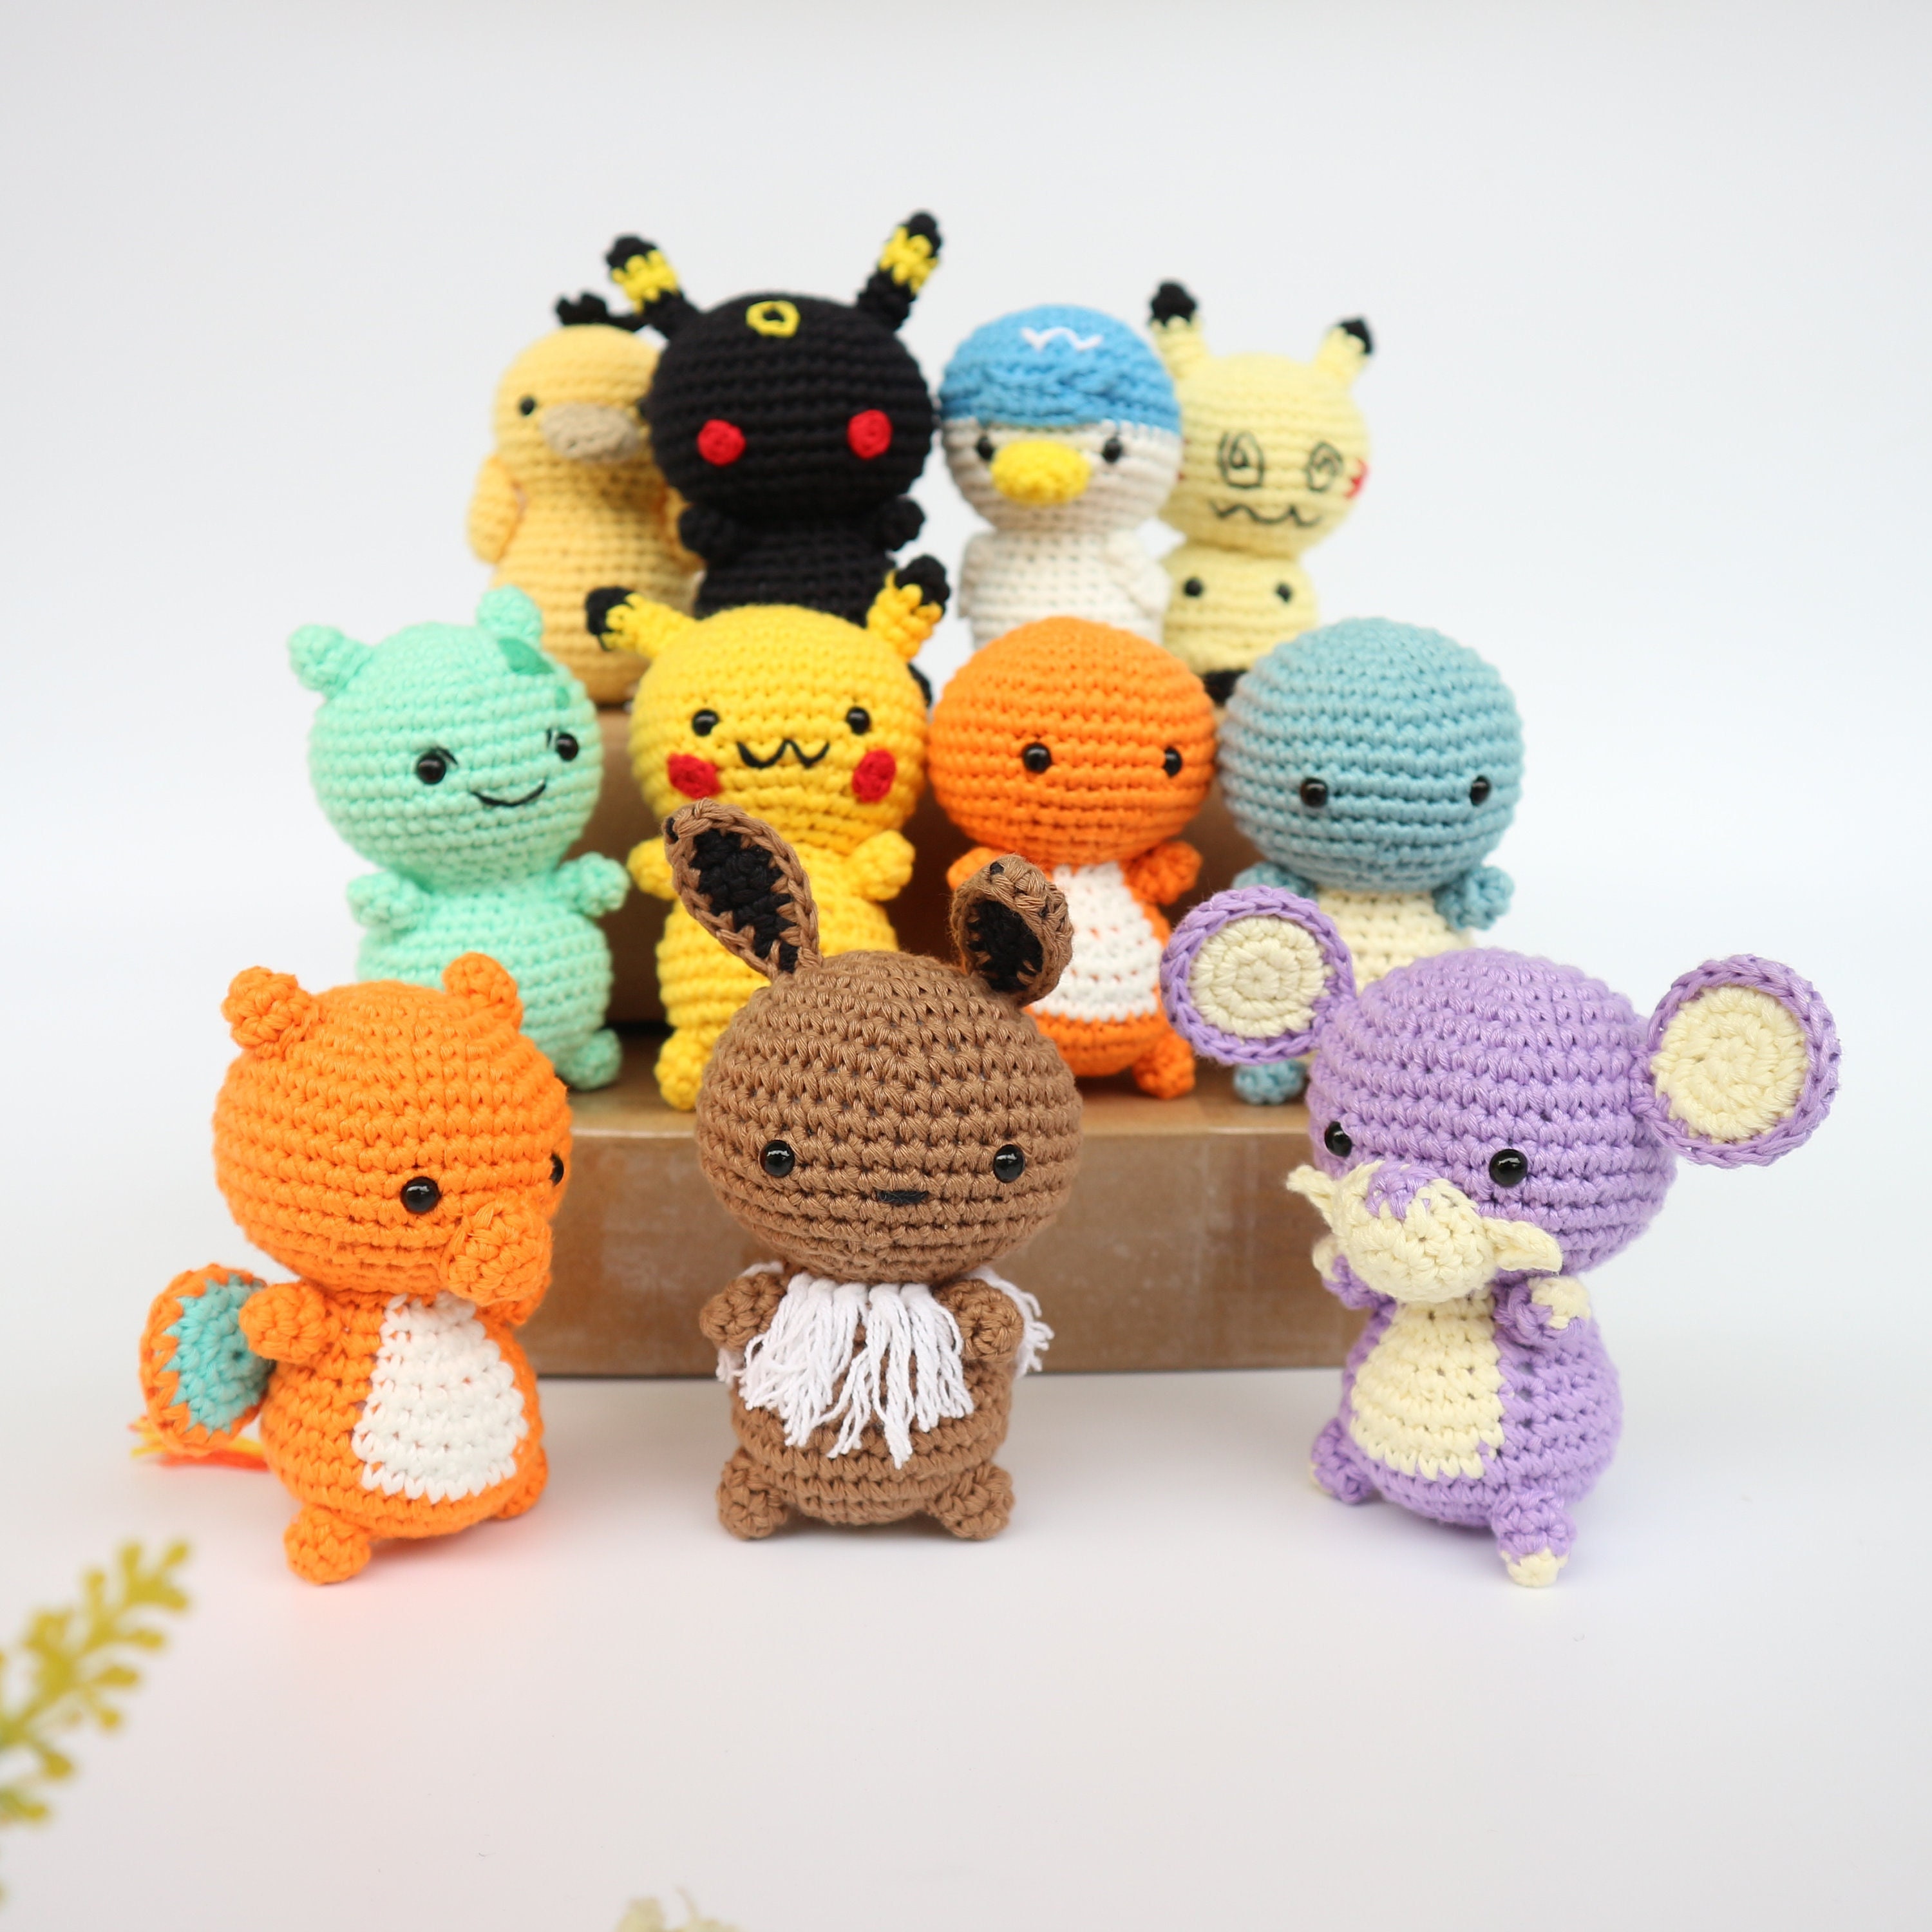 Pokemon SQUIRTLE - 100% Handmade crochet soft toy, amigurumi Limited #